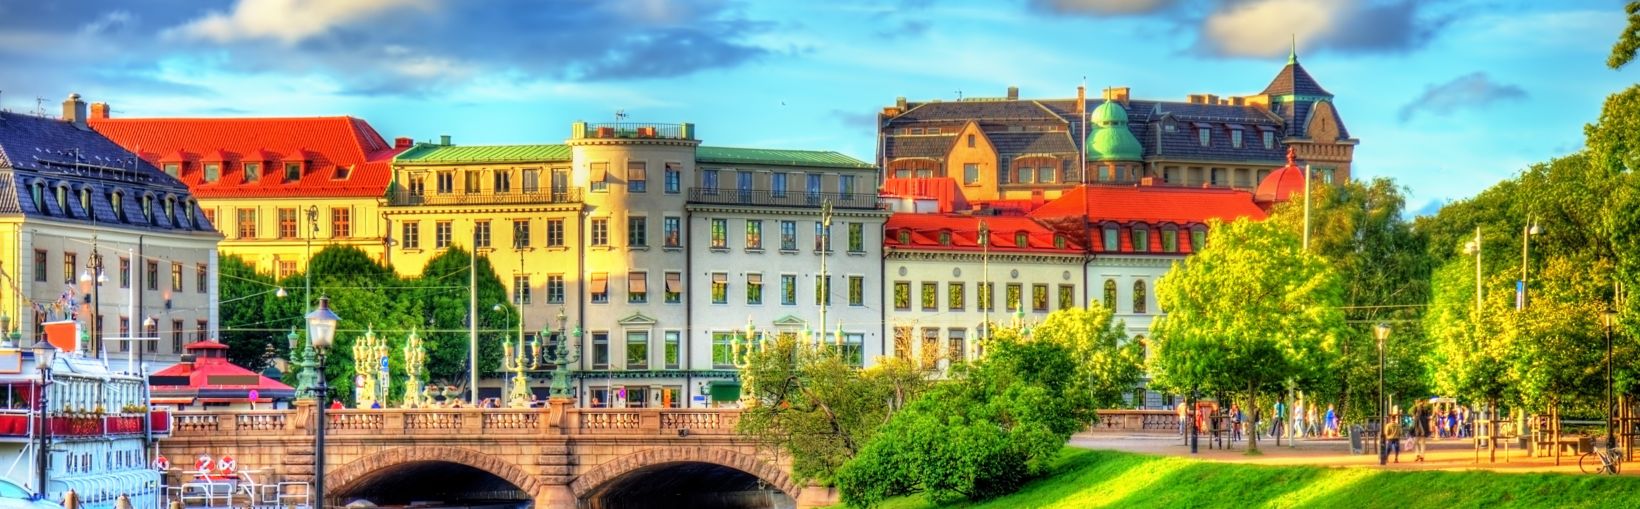 Canale nel centro storico di Göteborg, in Svezia